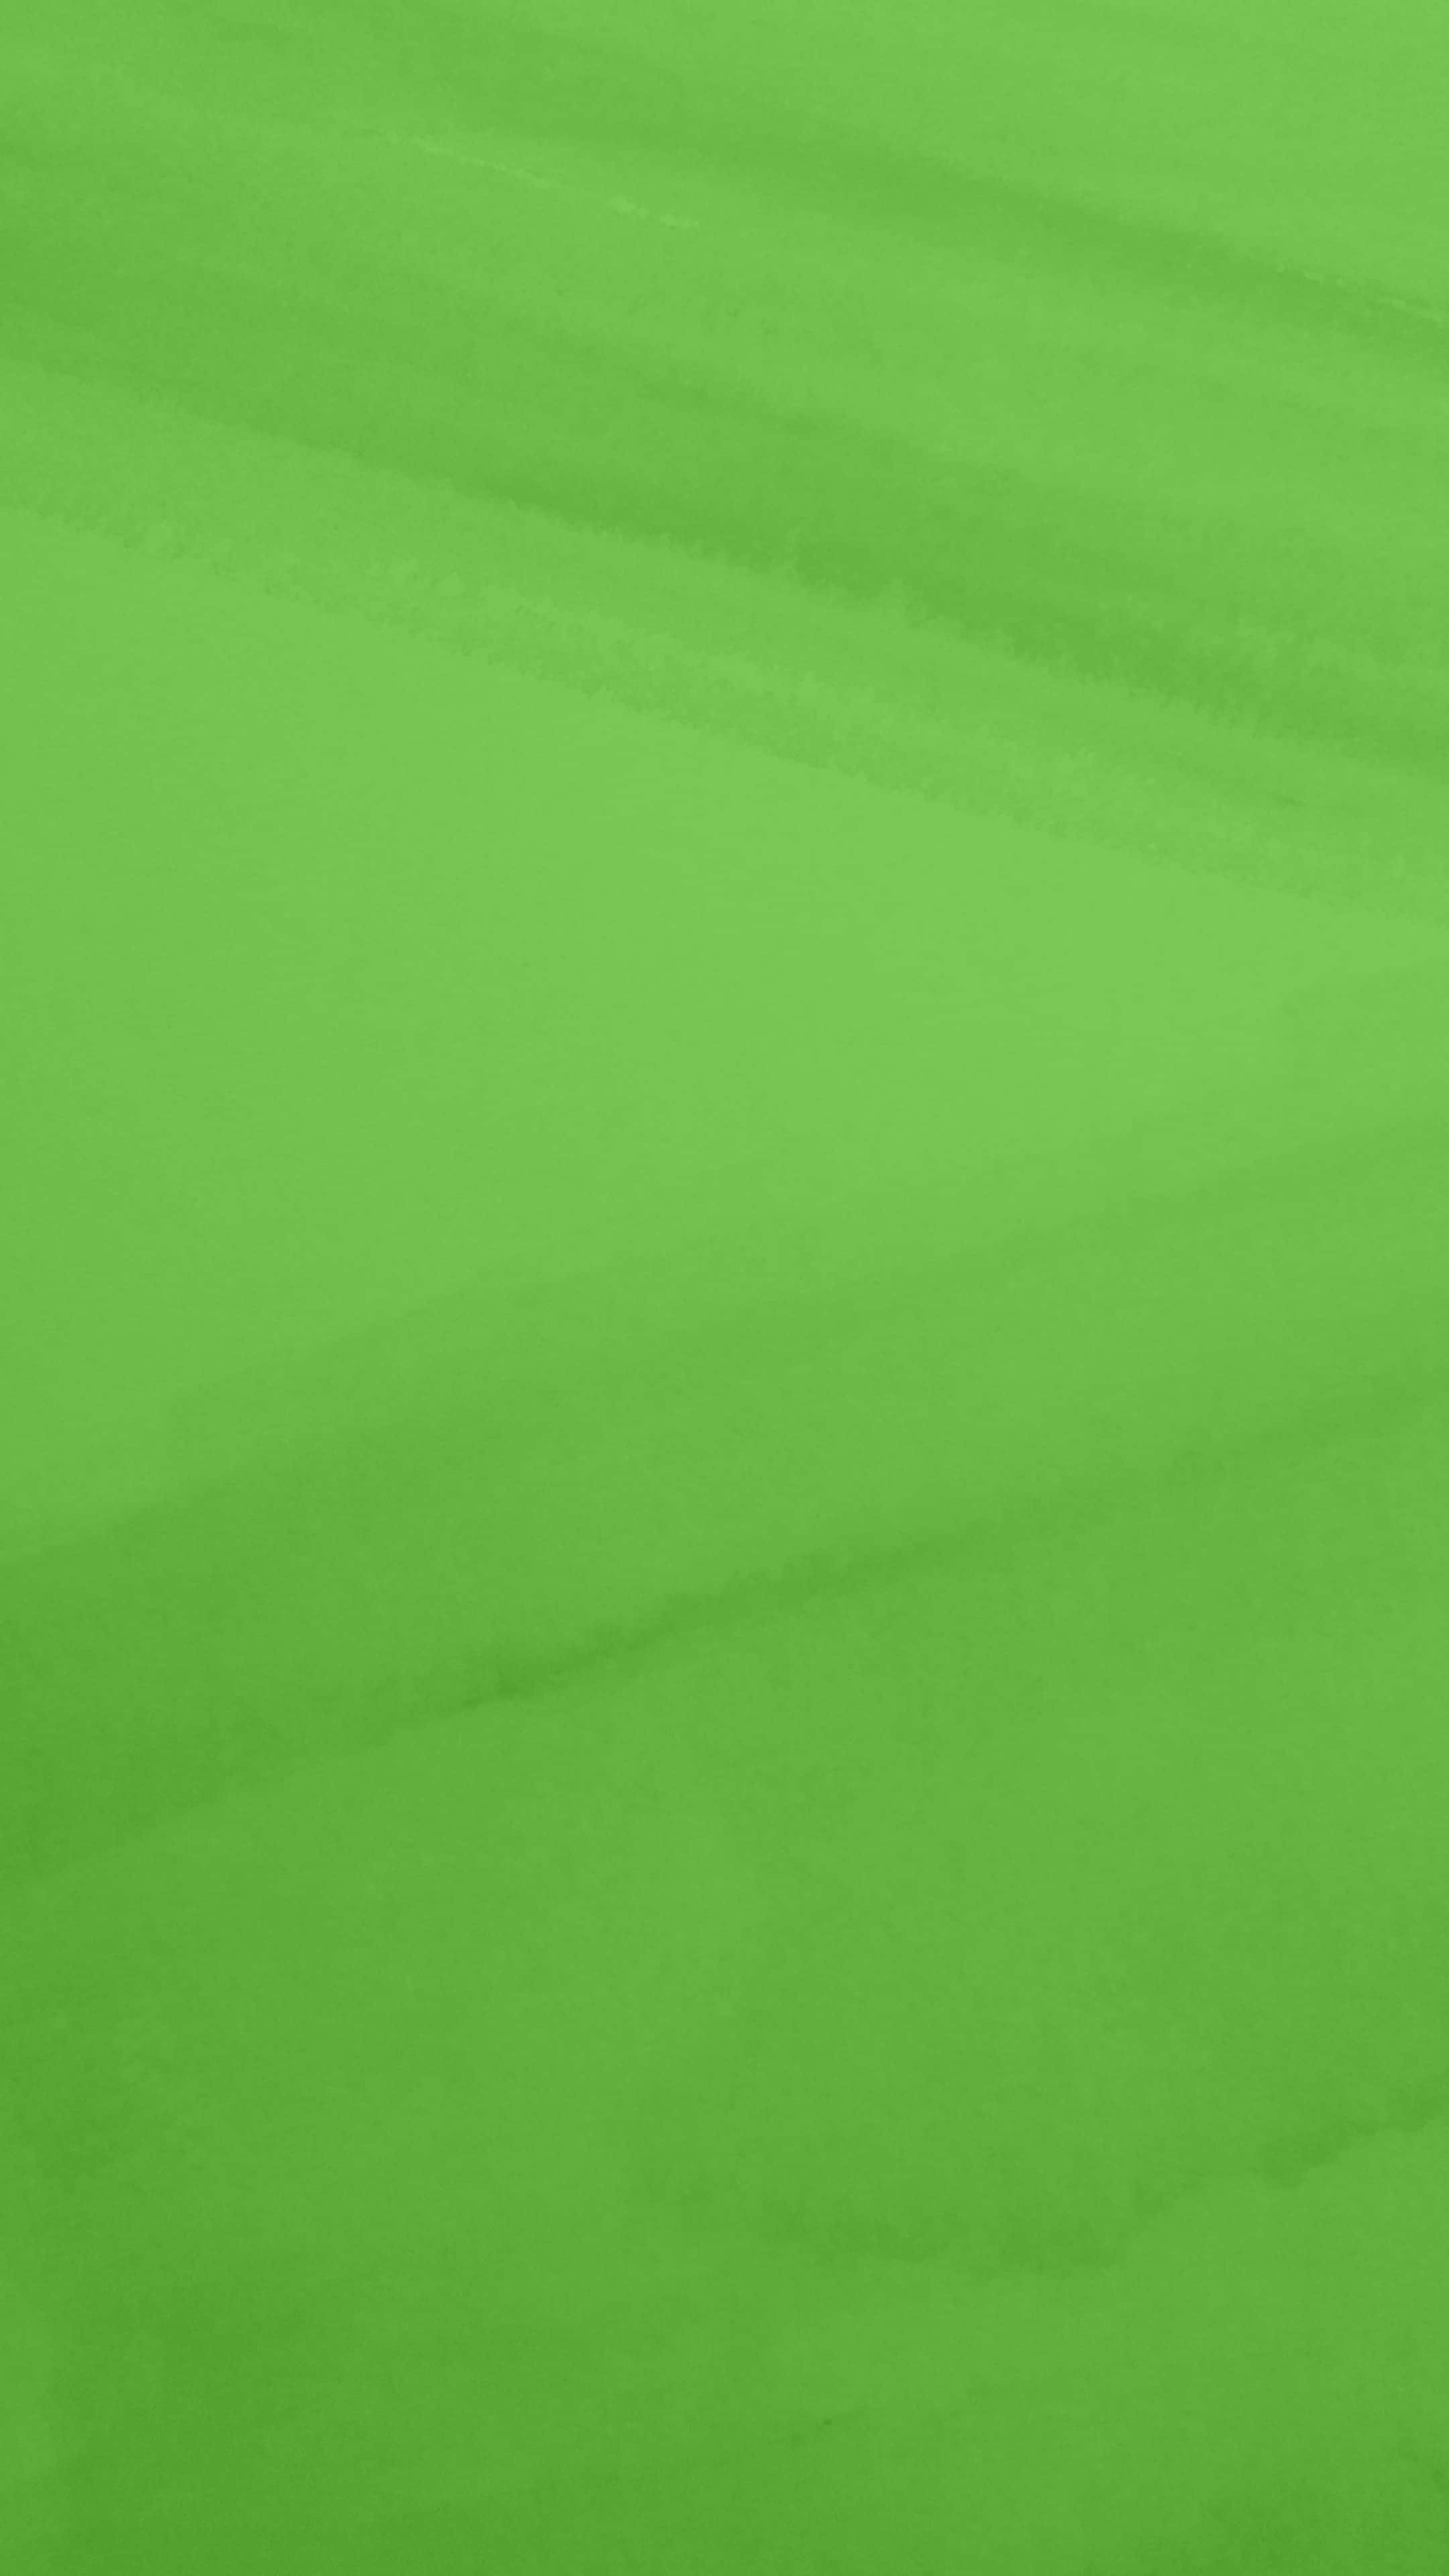 Green 2160 X 3840 Background